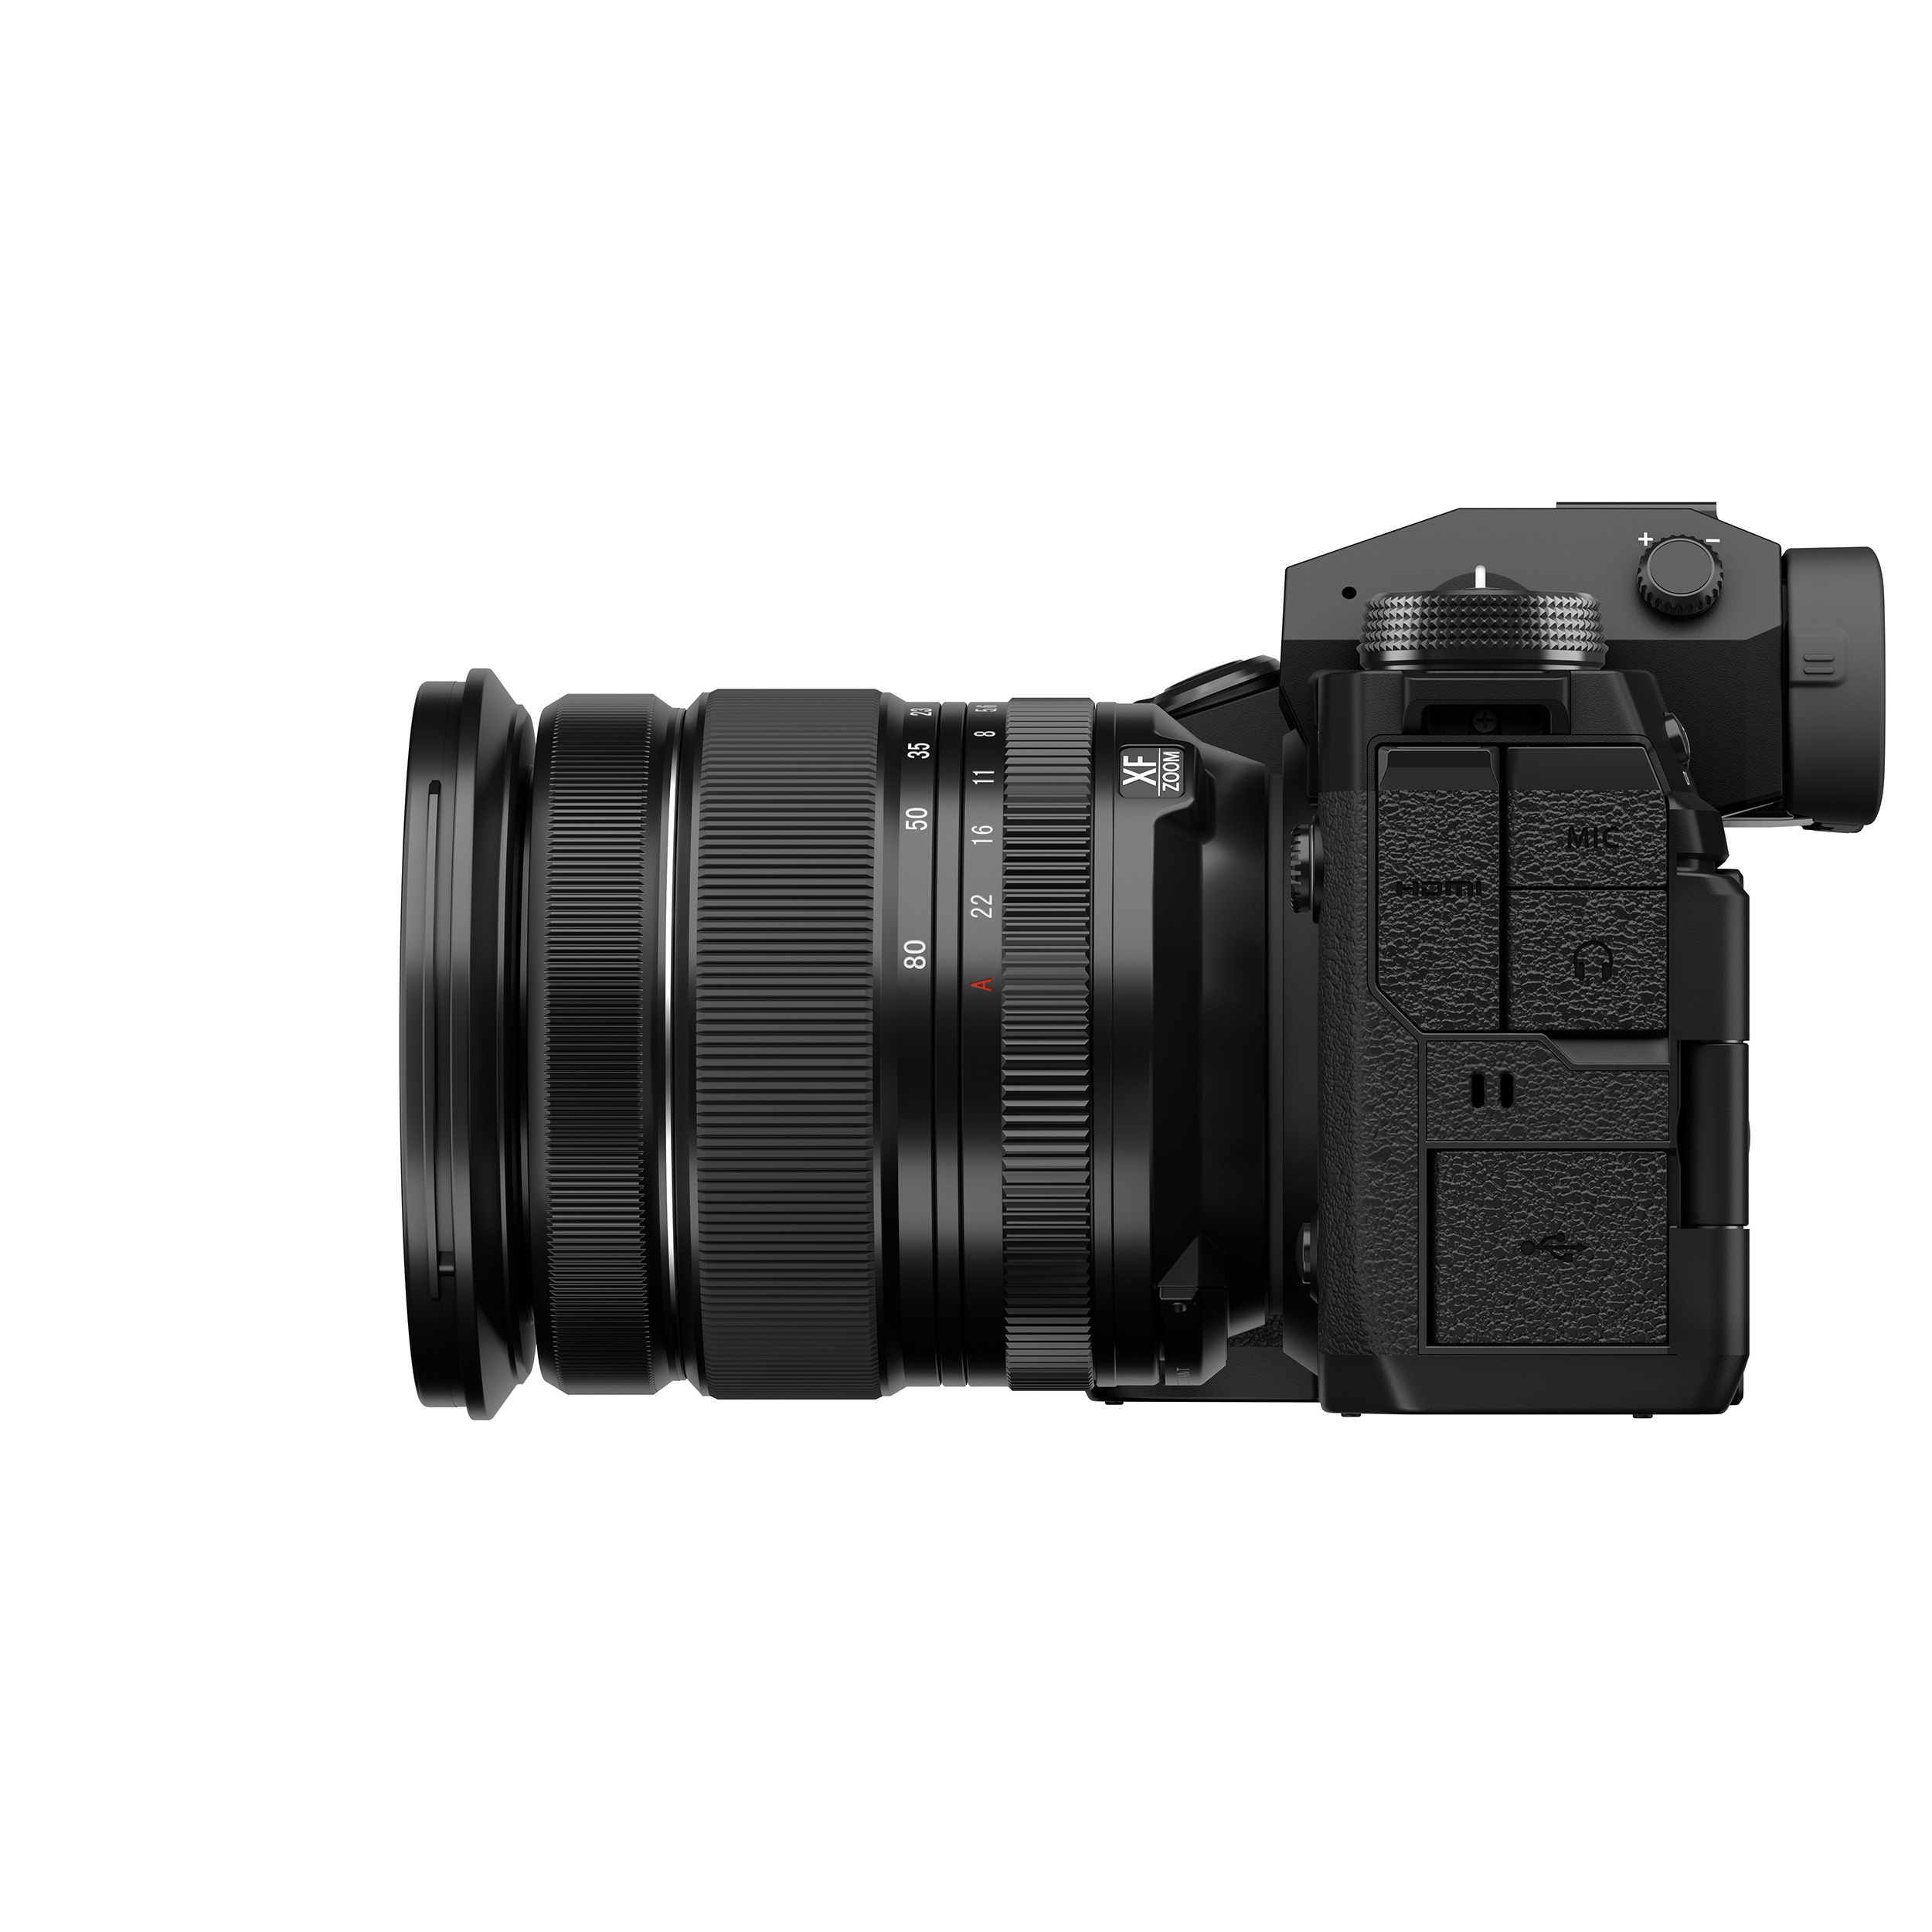 Fujifilm X-H2 Mirrorless Camera with 16-80mm Lens